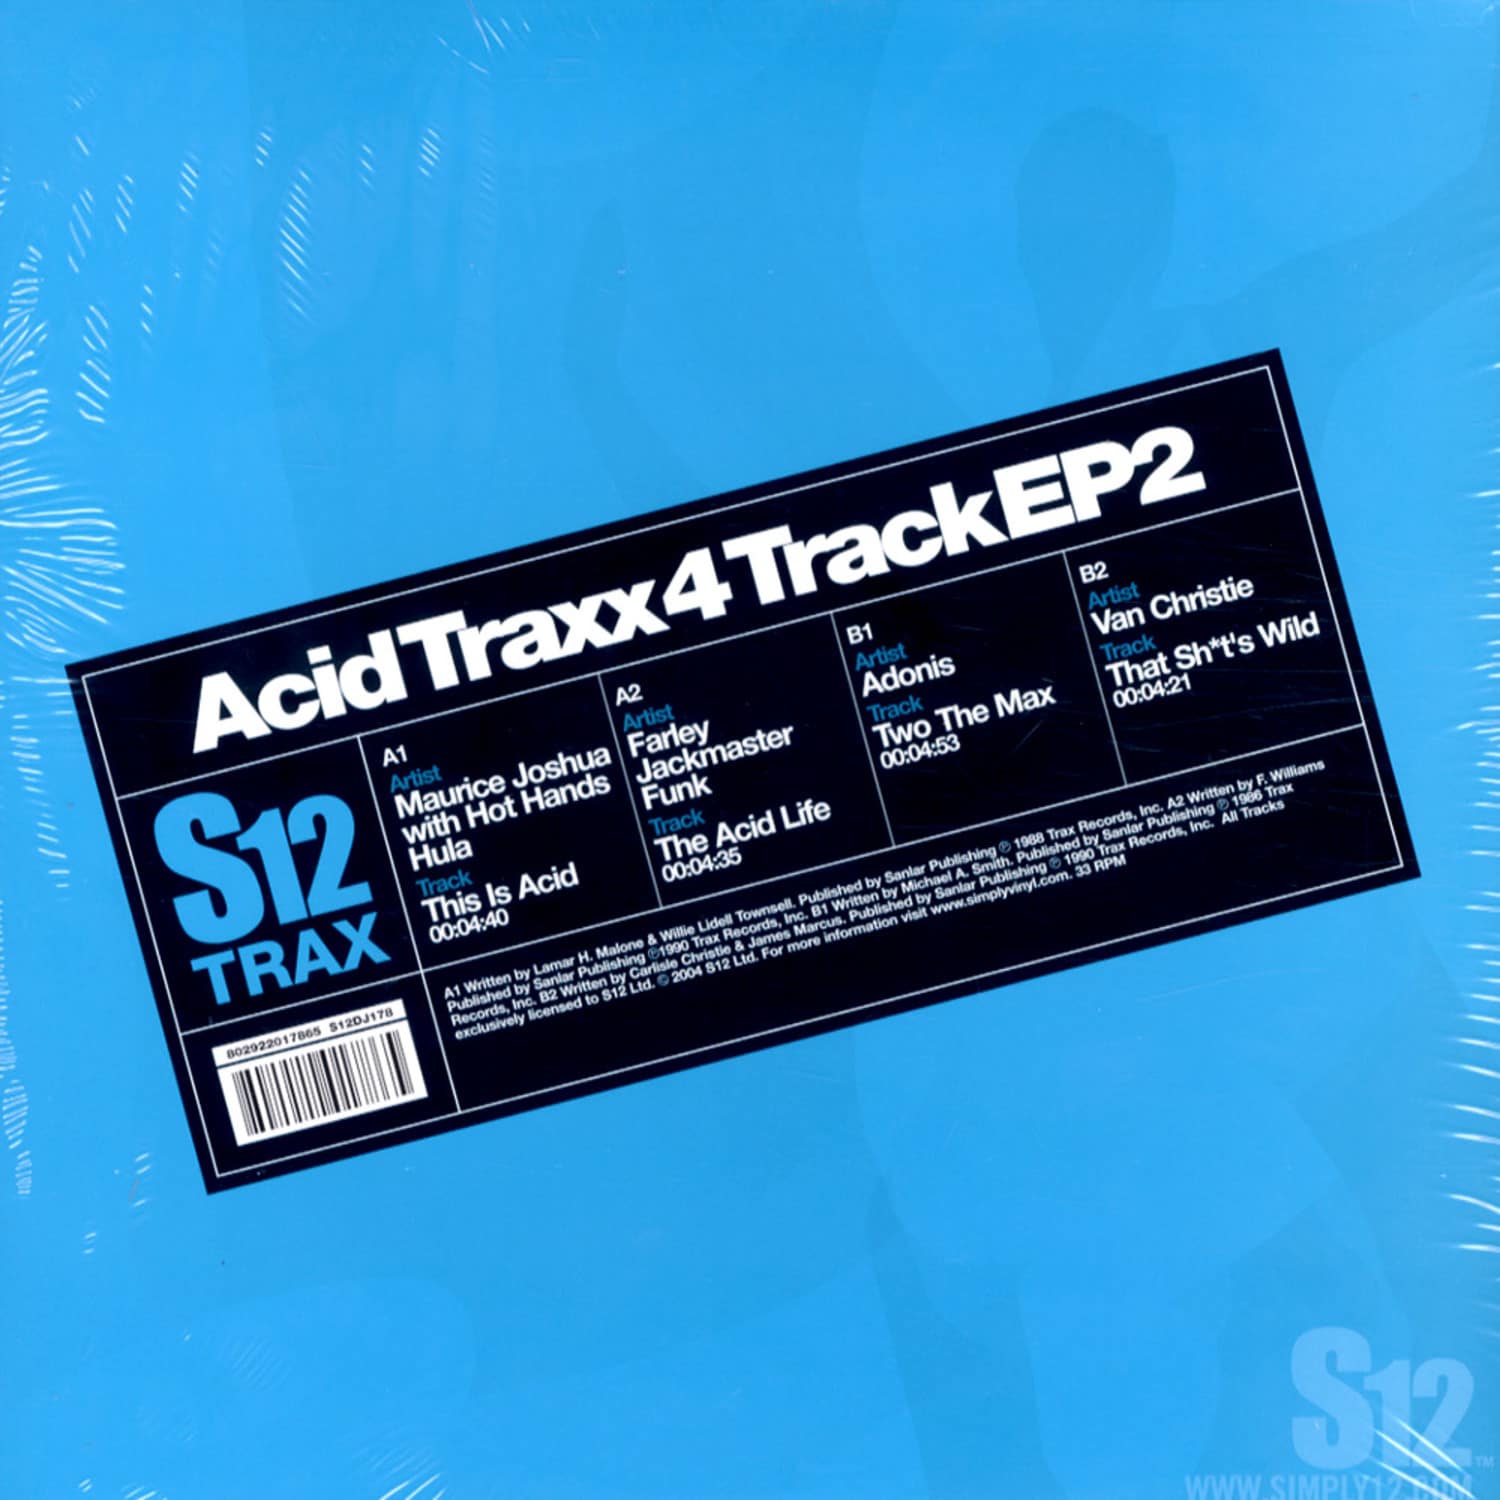 V/A - ACID TRAXX 4 TRACK EP2